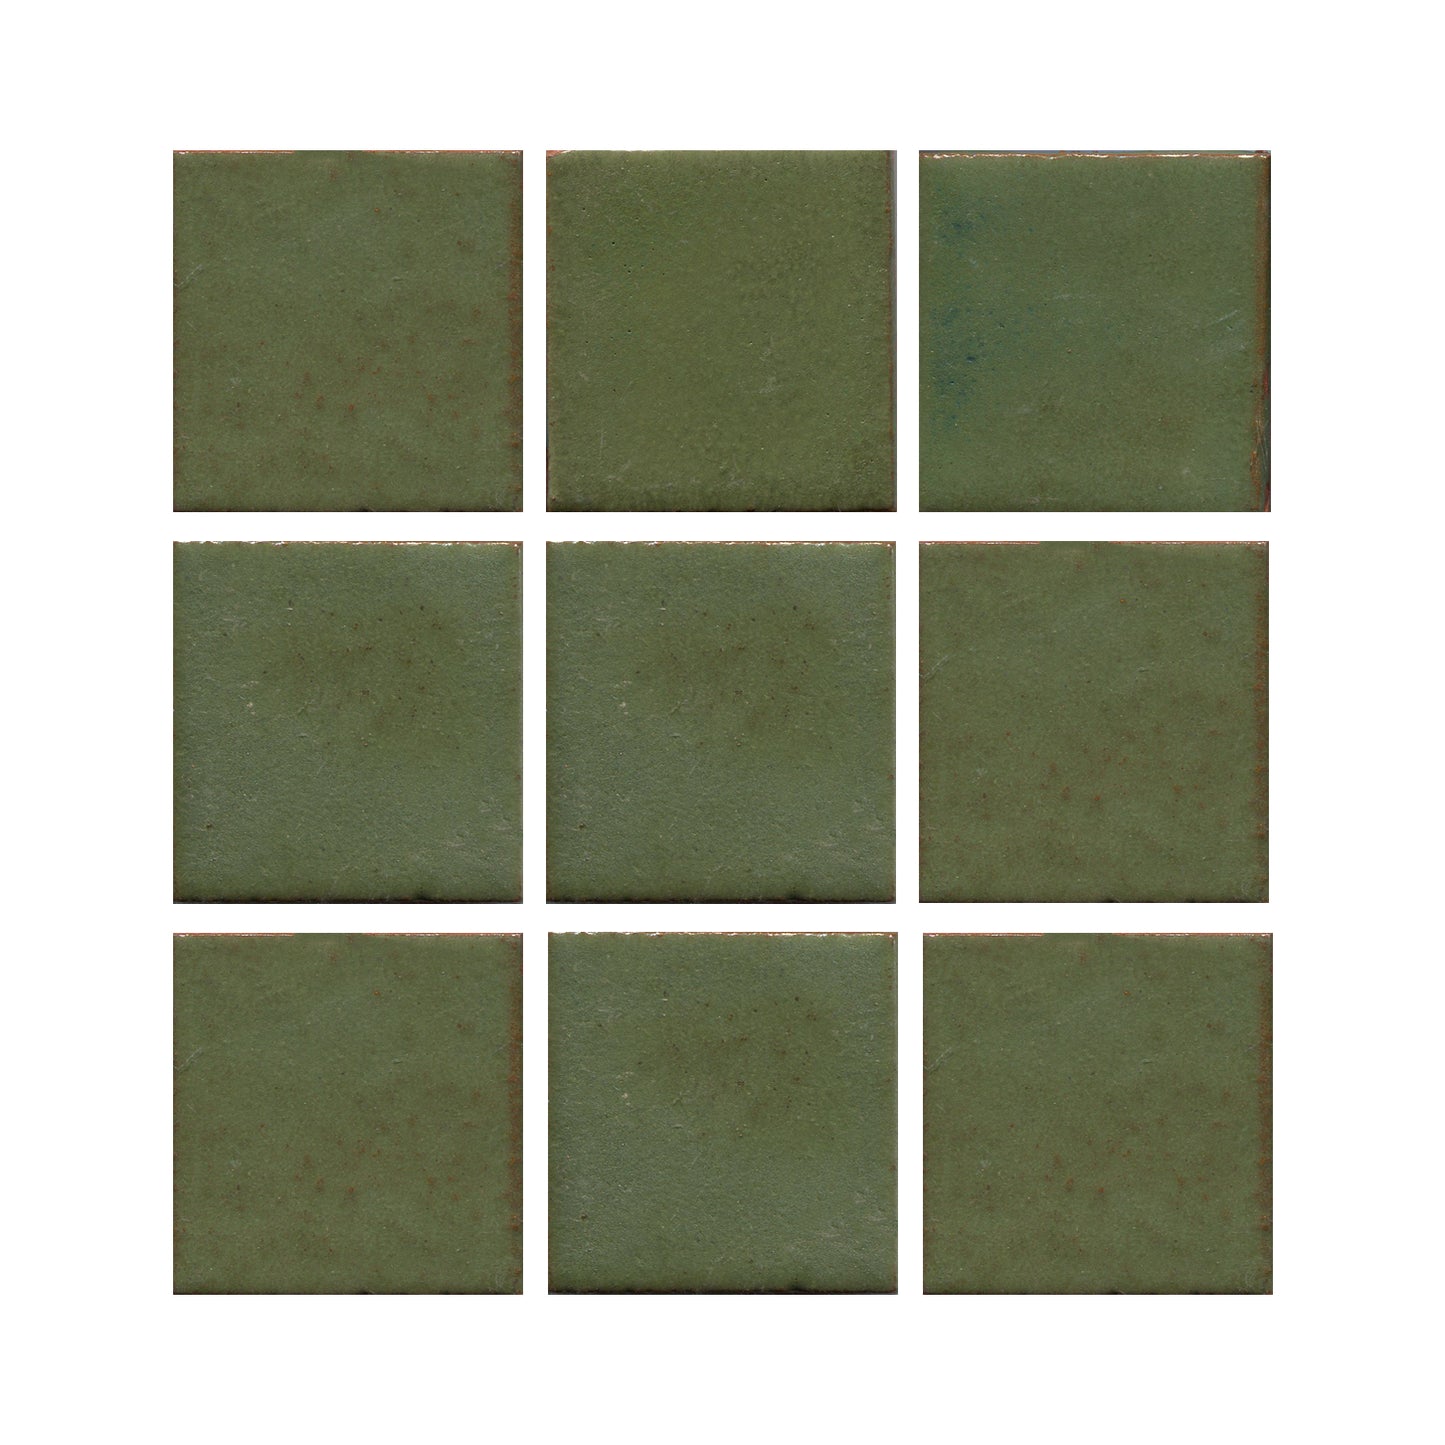 Pesto green 3x3 field tile